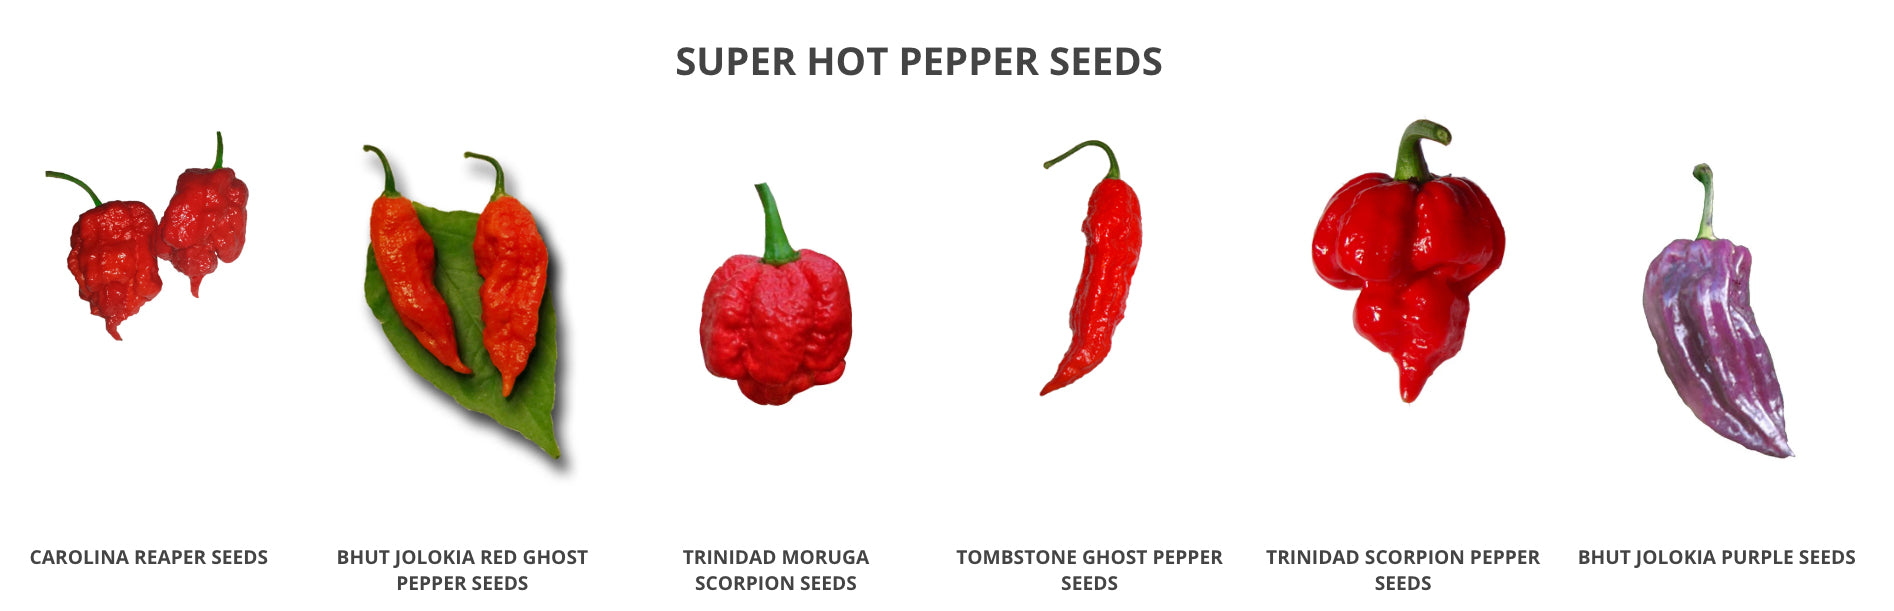 Super Hot Pepper Seeds